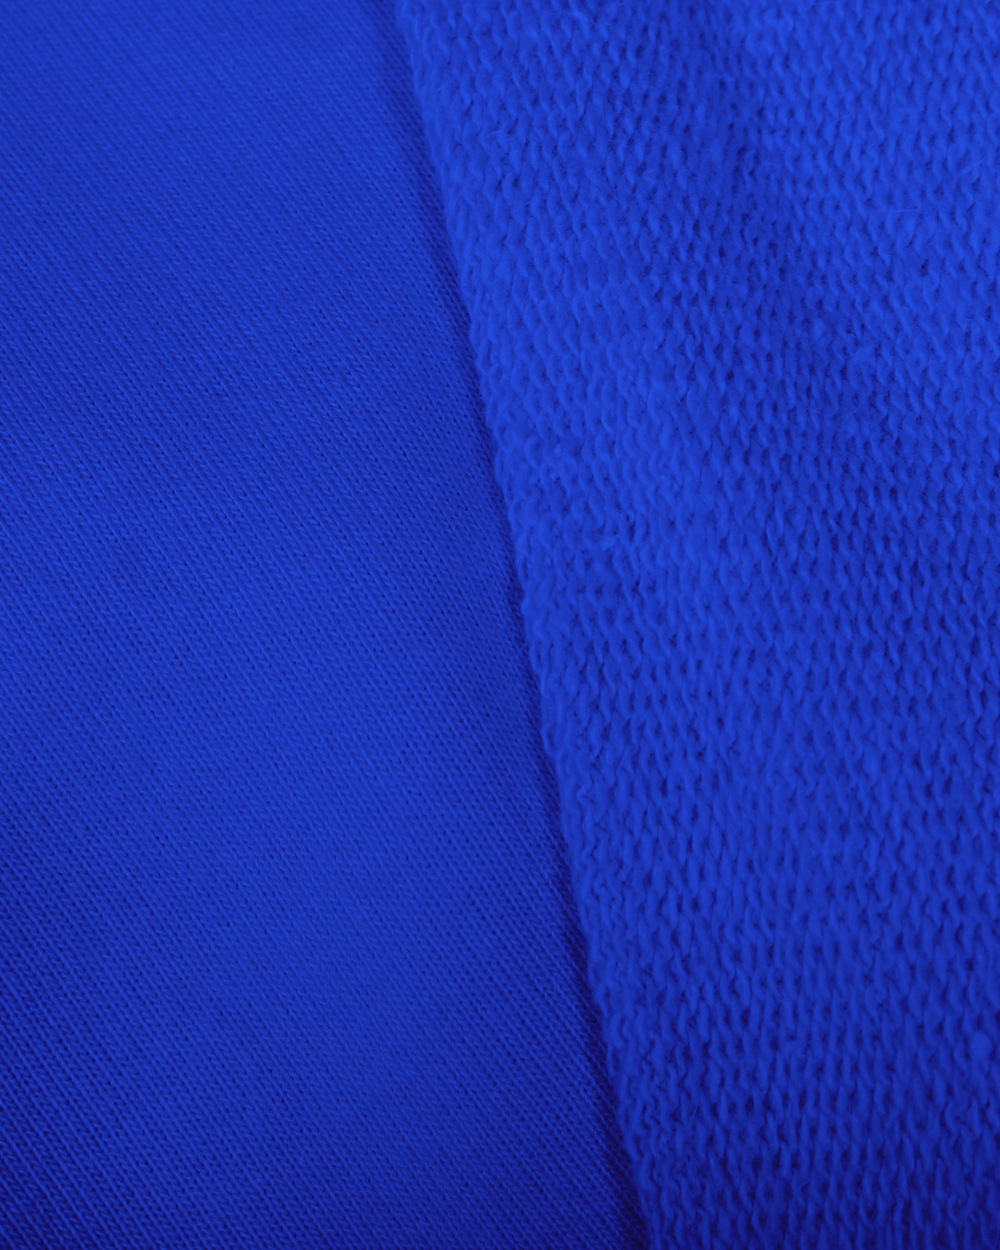 Teplkovina Classic (290g, bavlna s elastanom) - Krovsk modr - Kliknutm na obrzok zatvorte -